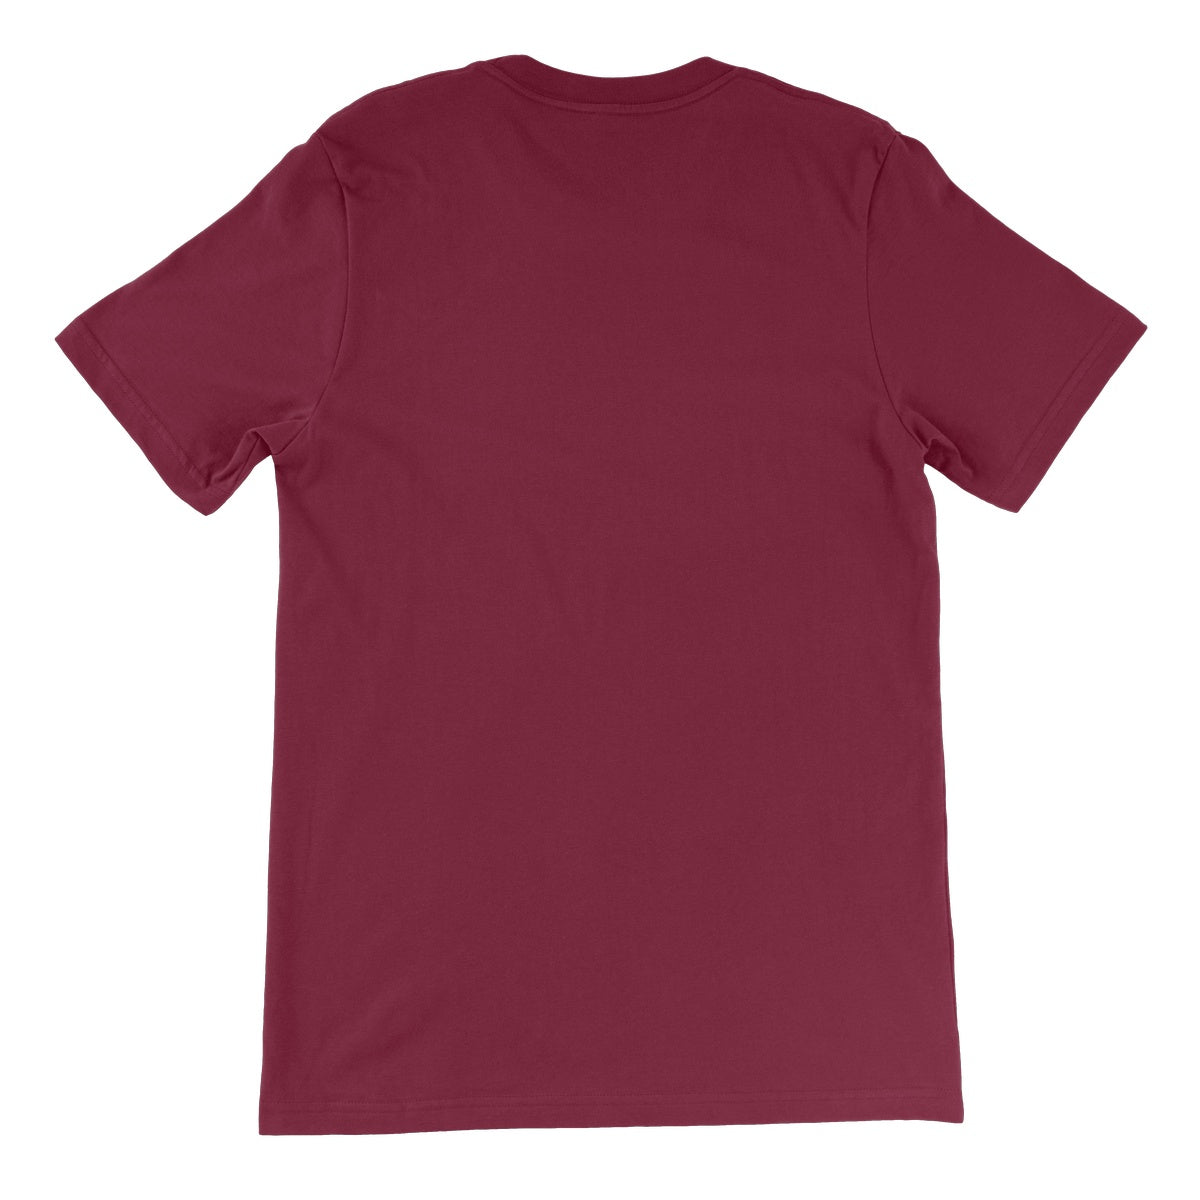 Slimed Illustrated Tee Unisex Short Sleeve T-Shirt